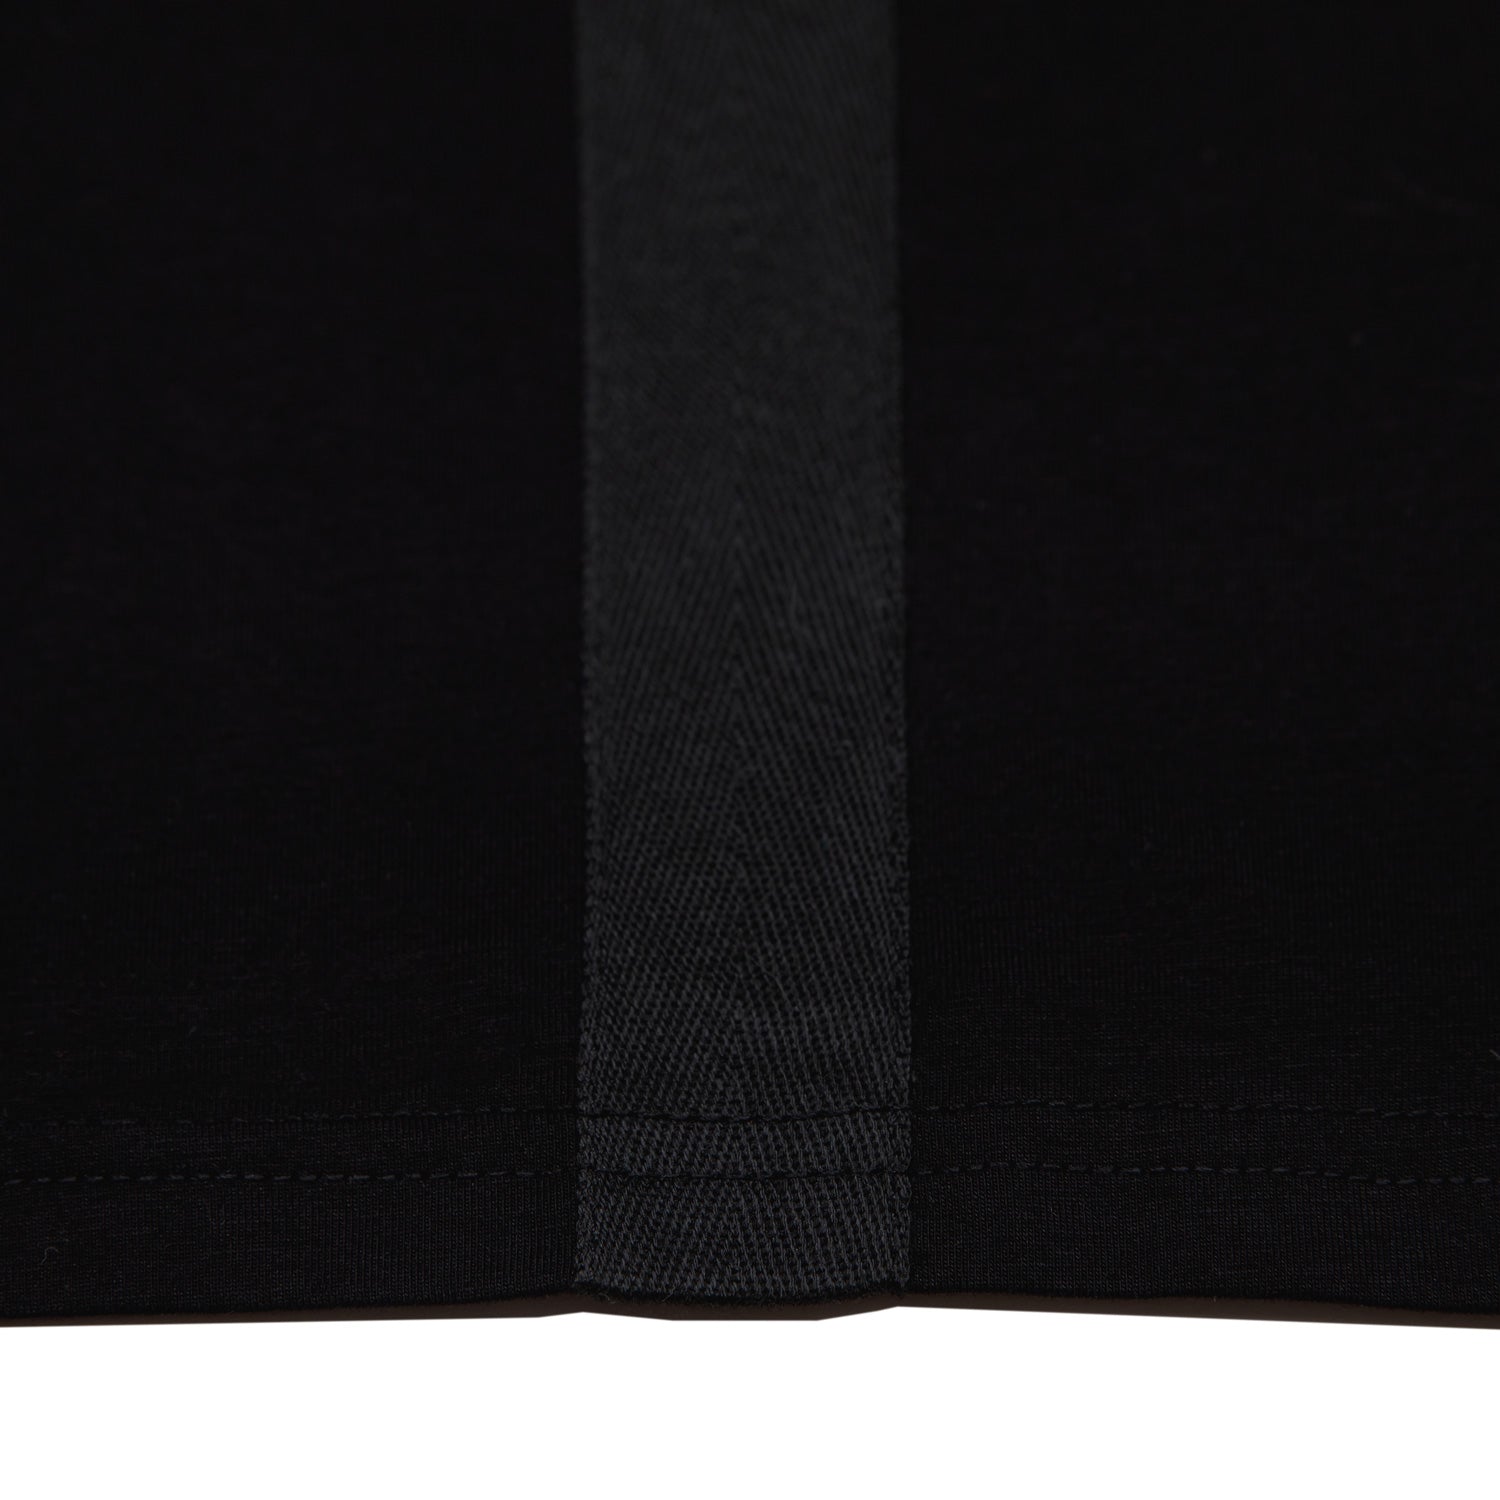 Deep black, T-shirt, shirt, man, plane tee, soft cotton, sleek, detail view,